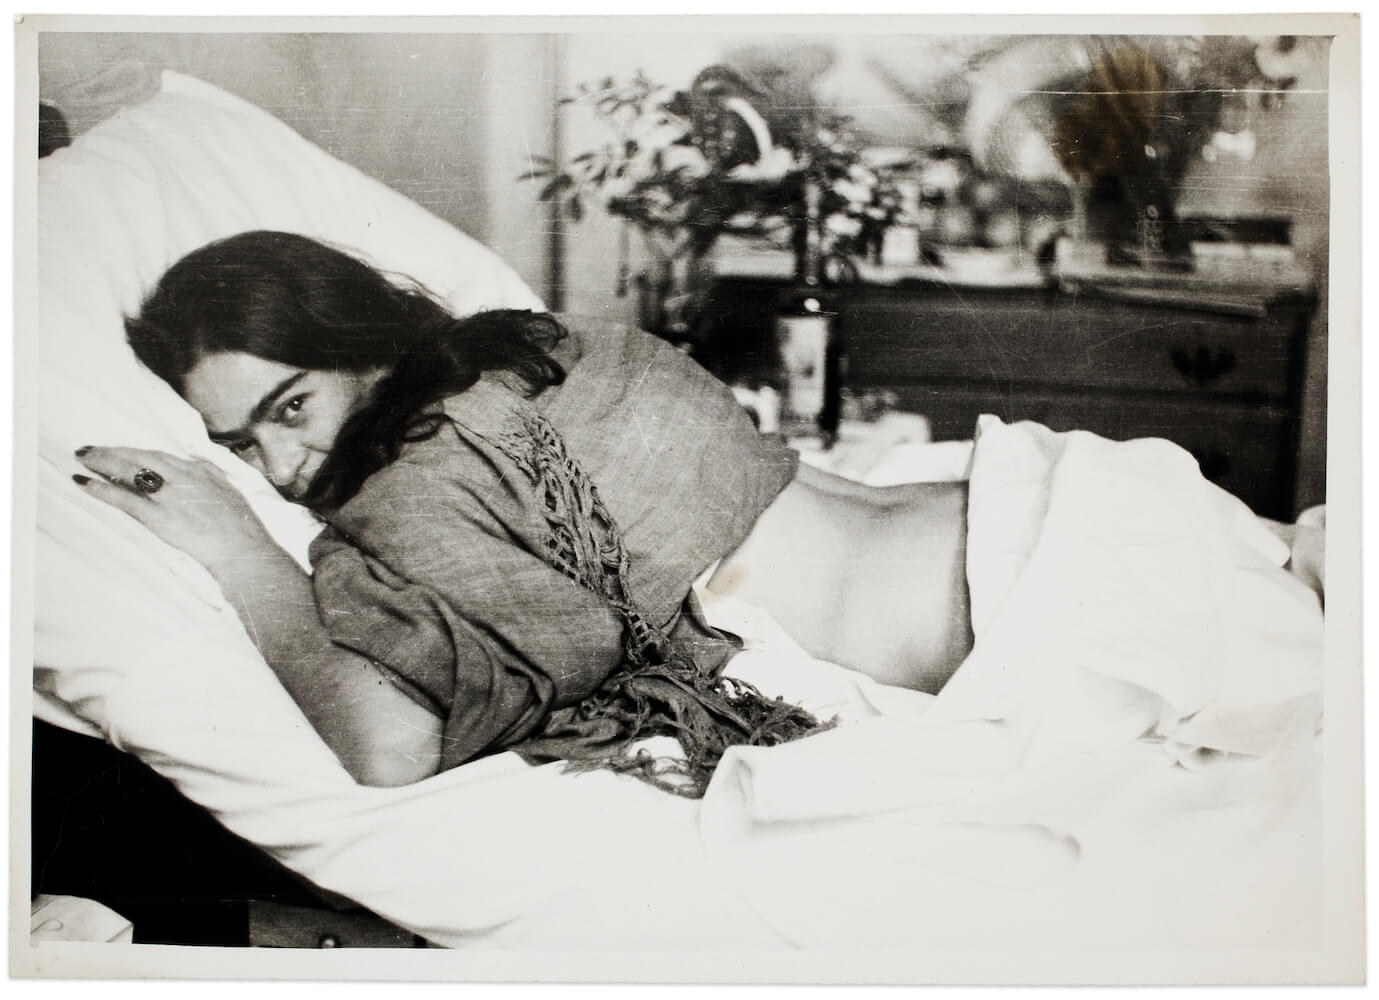  Frida ležící na břiše, Nickolas Muray, 1946 © Muzeum Fridy Kahlo, zdroj GHMP